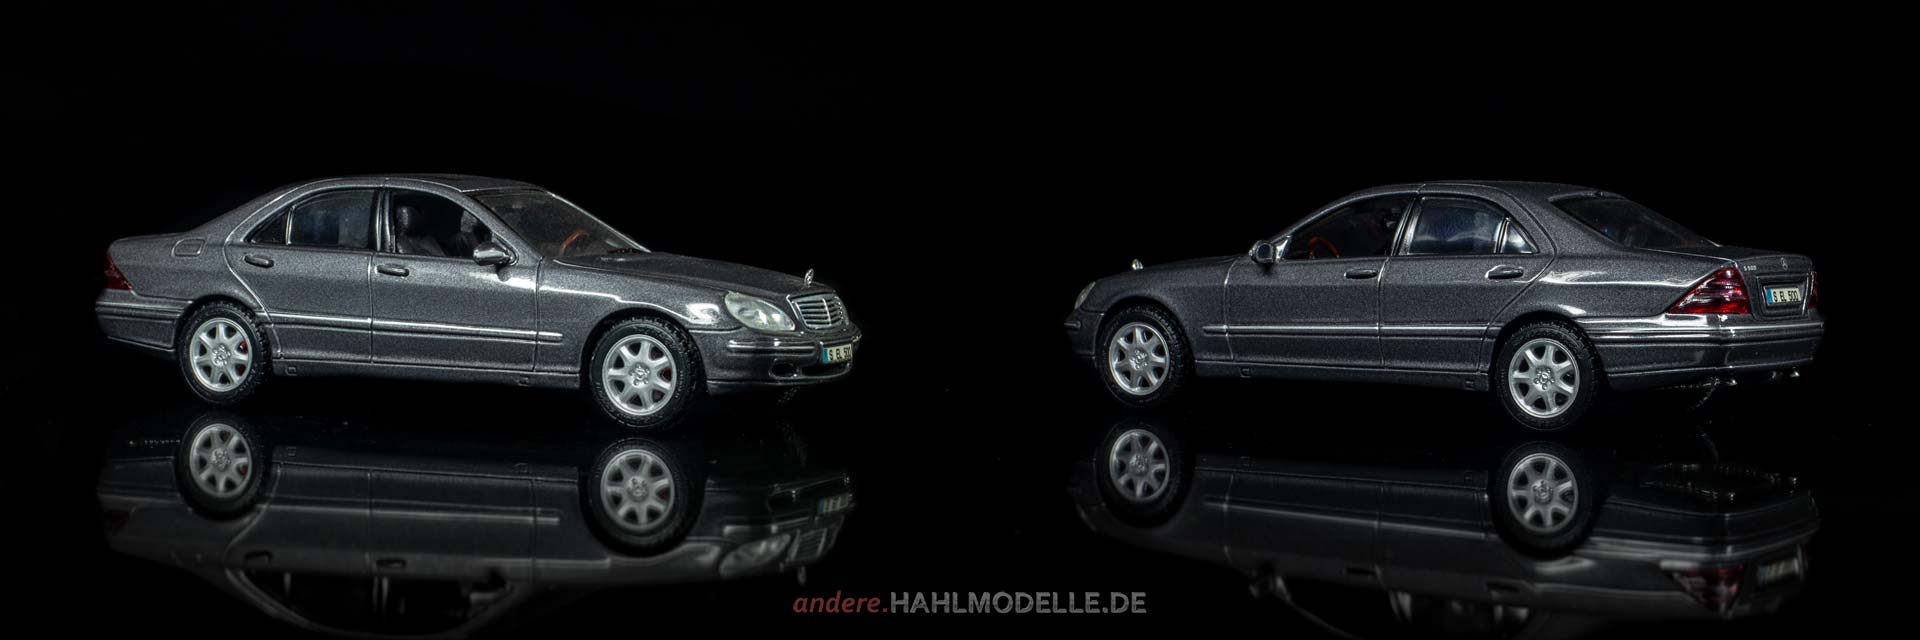 Mercedes-Benz 600 S (W 220) | Limousine | Maisto | www.andere.hahlmodelle.de